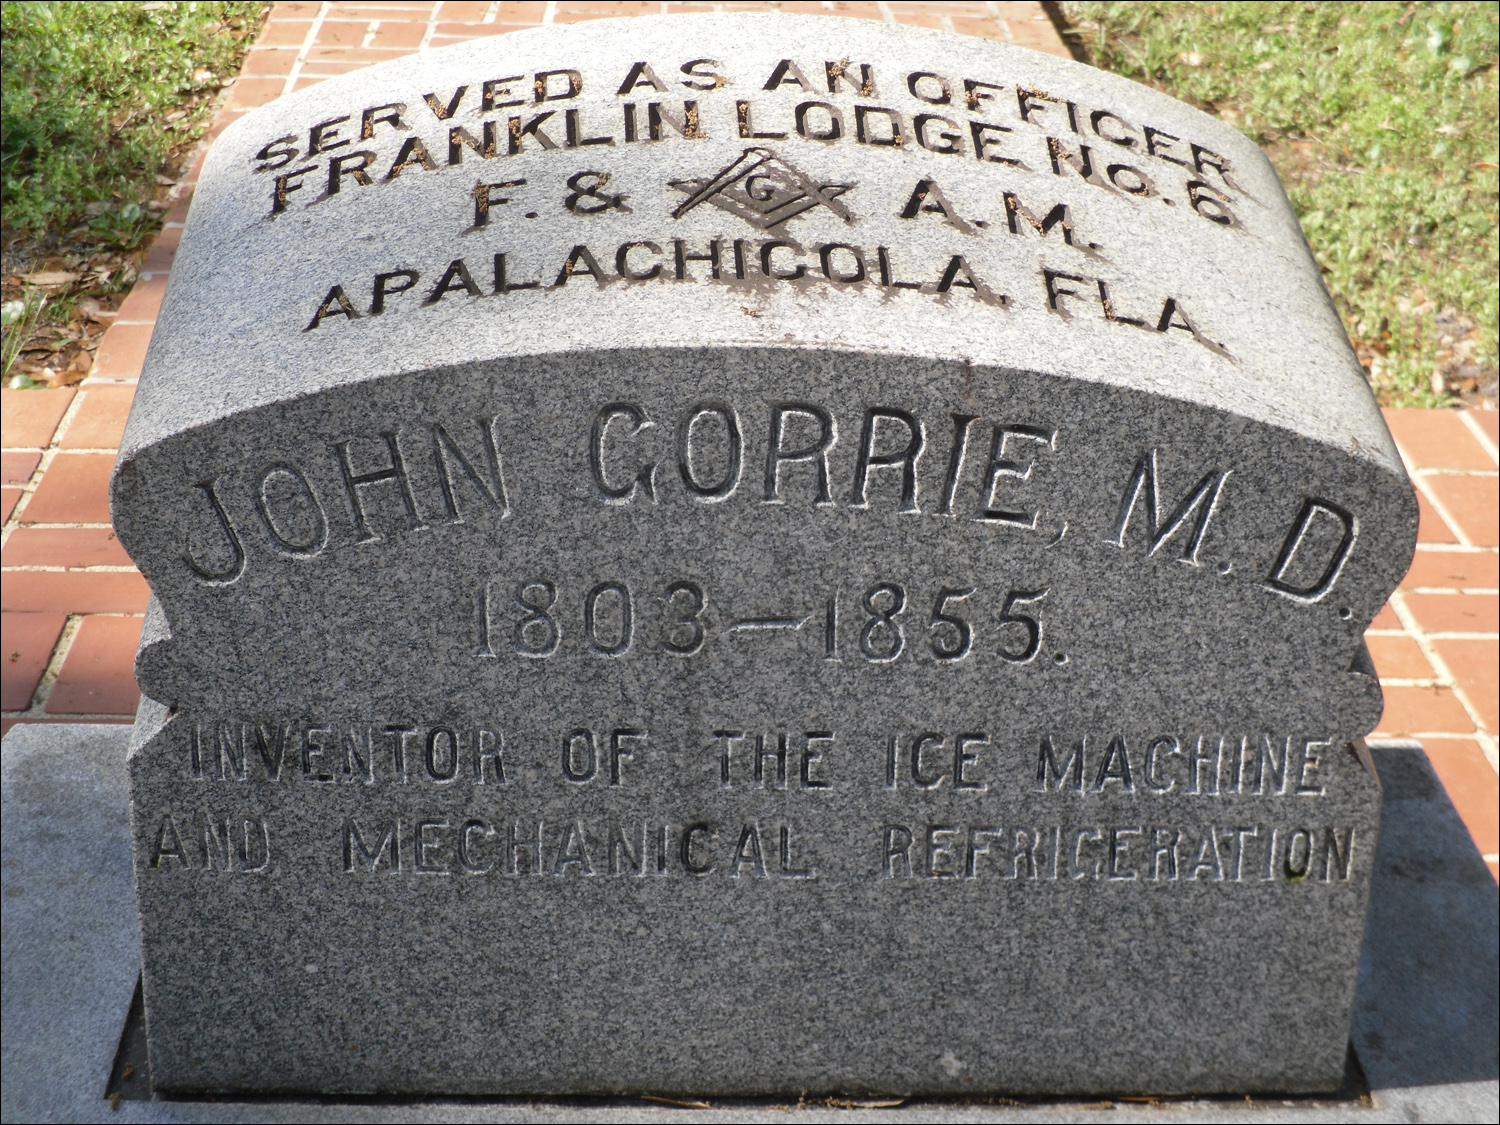 John Gorrie Ice Machine inventor museum